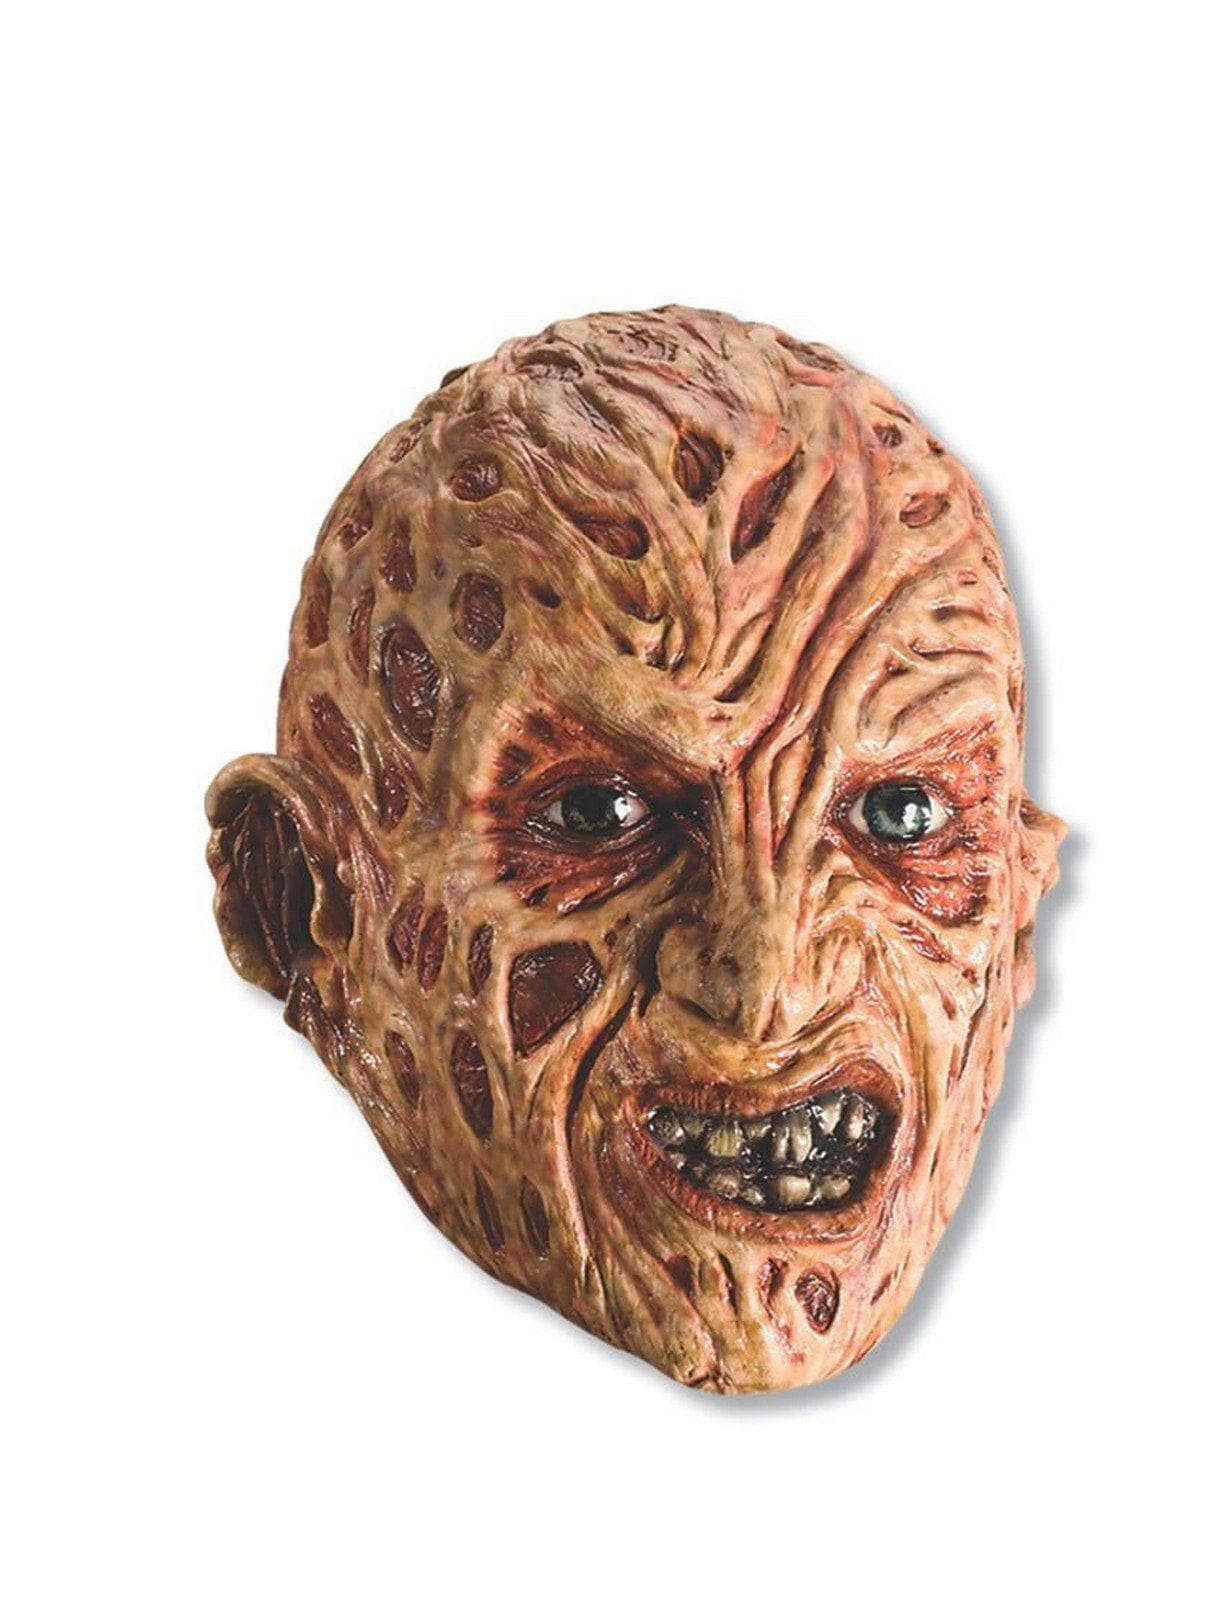 Adult A Nightmare on Elm Street Vinyl Freddy Krueger Mask - costumes.com